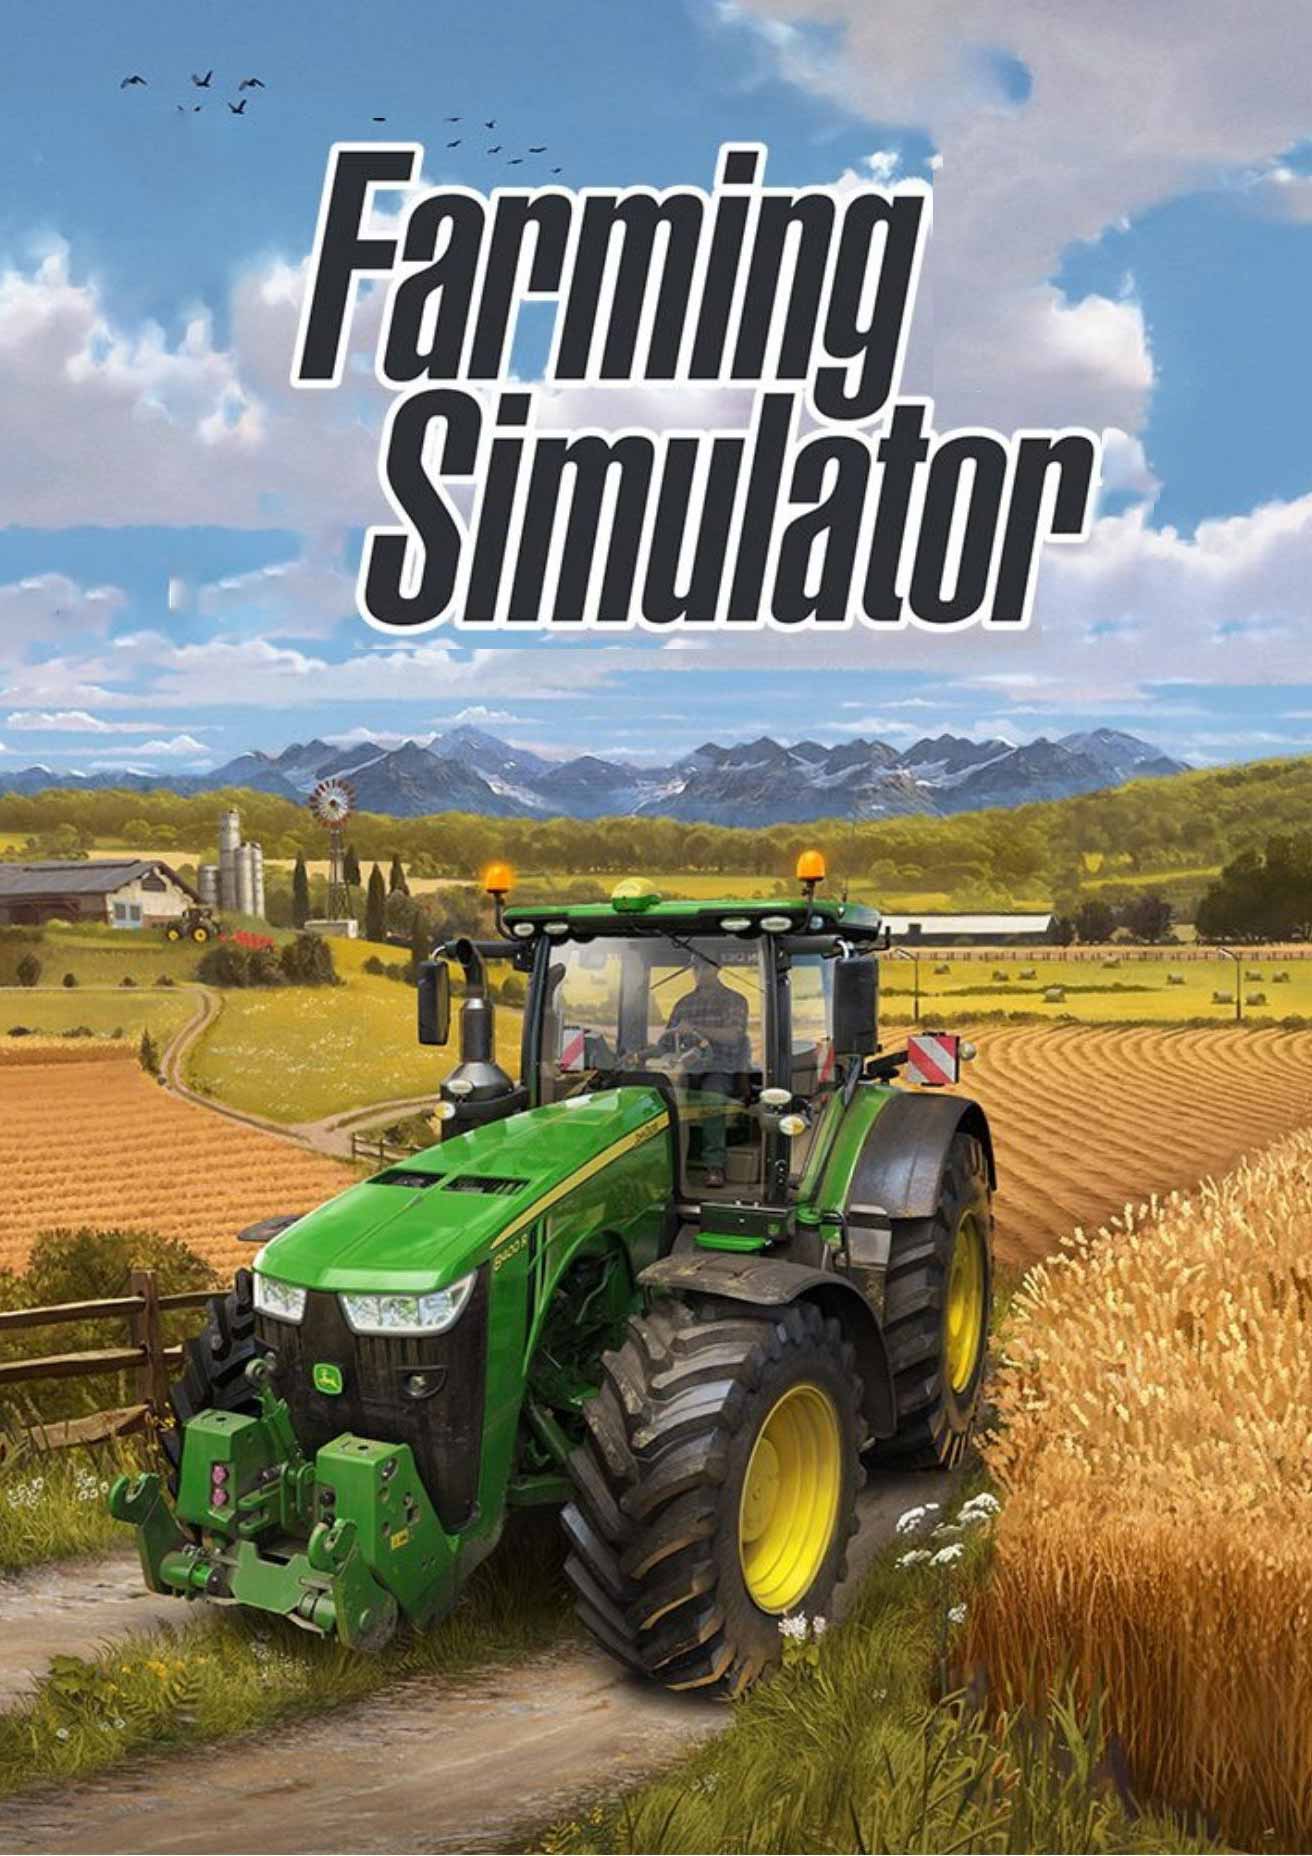 Farming Simulator. Source: Giants Software.